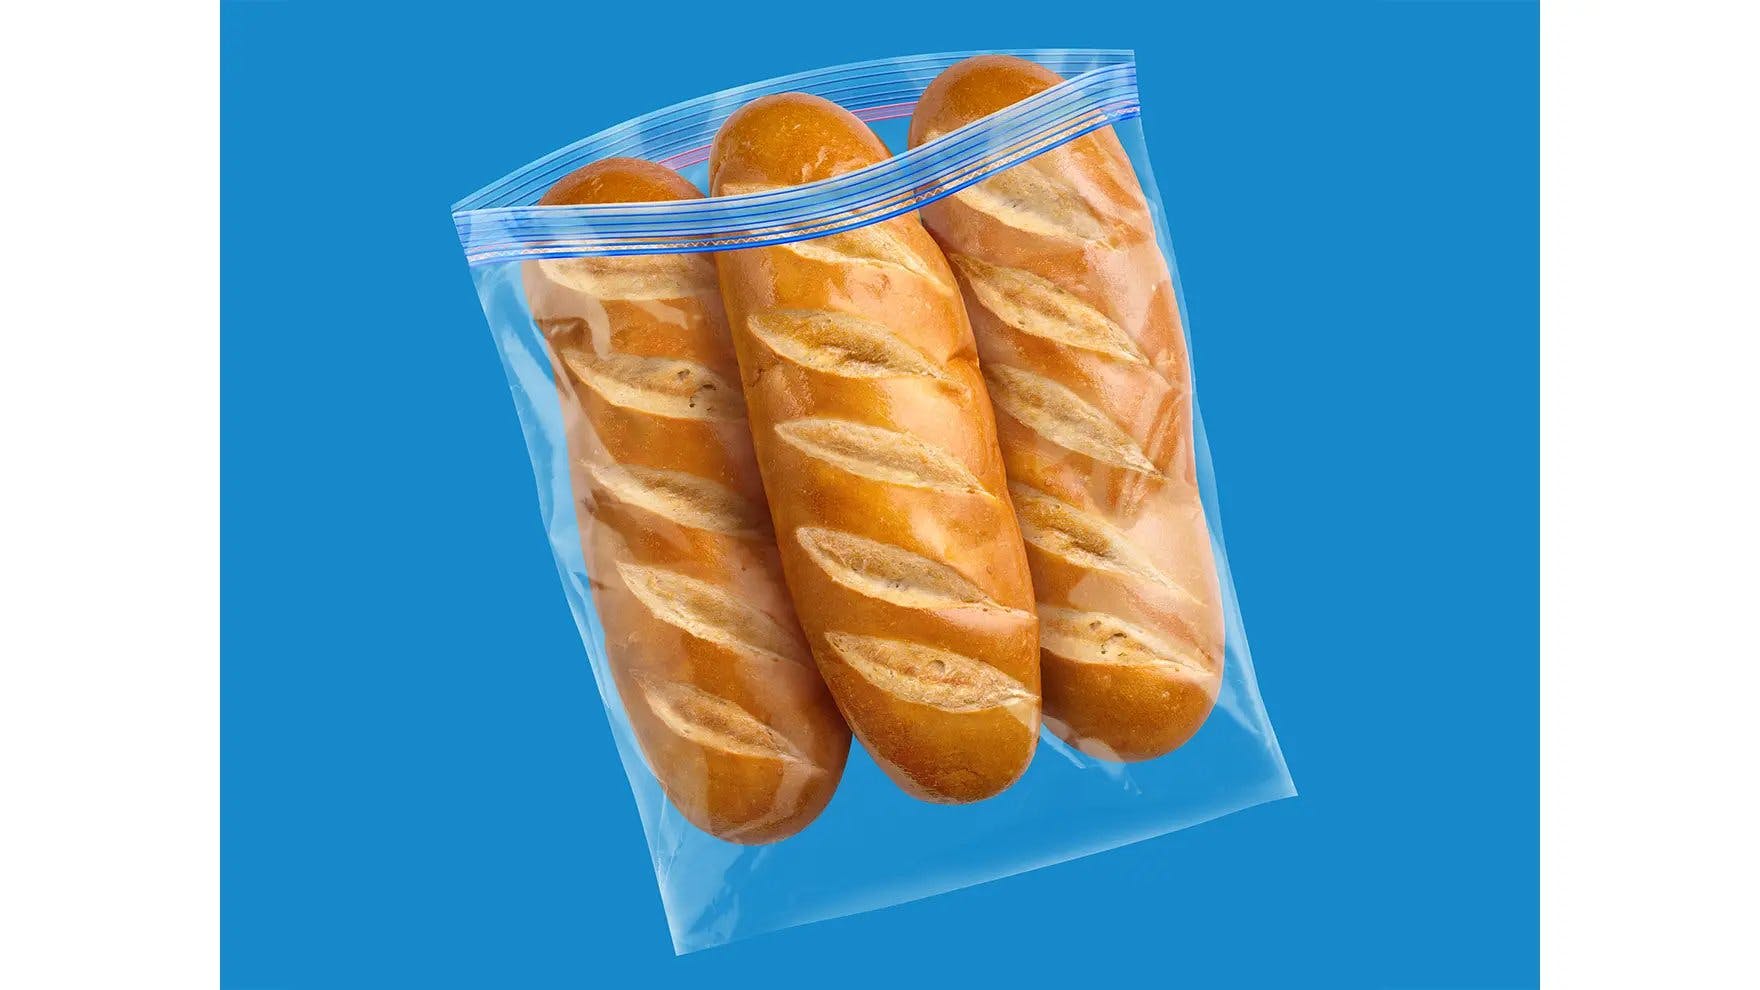 Three loaves of bread inside an Ziploc® brand extra large freezer bag